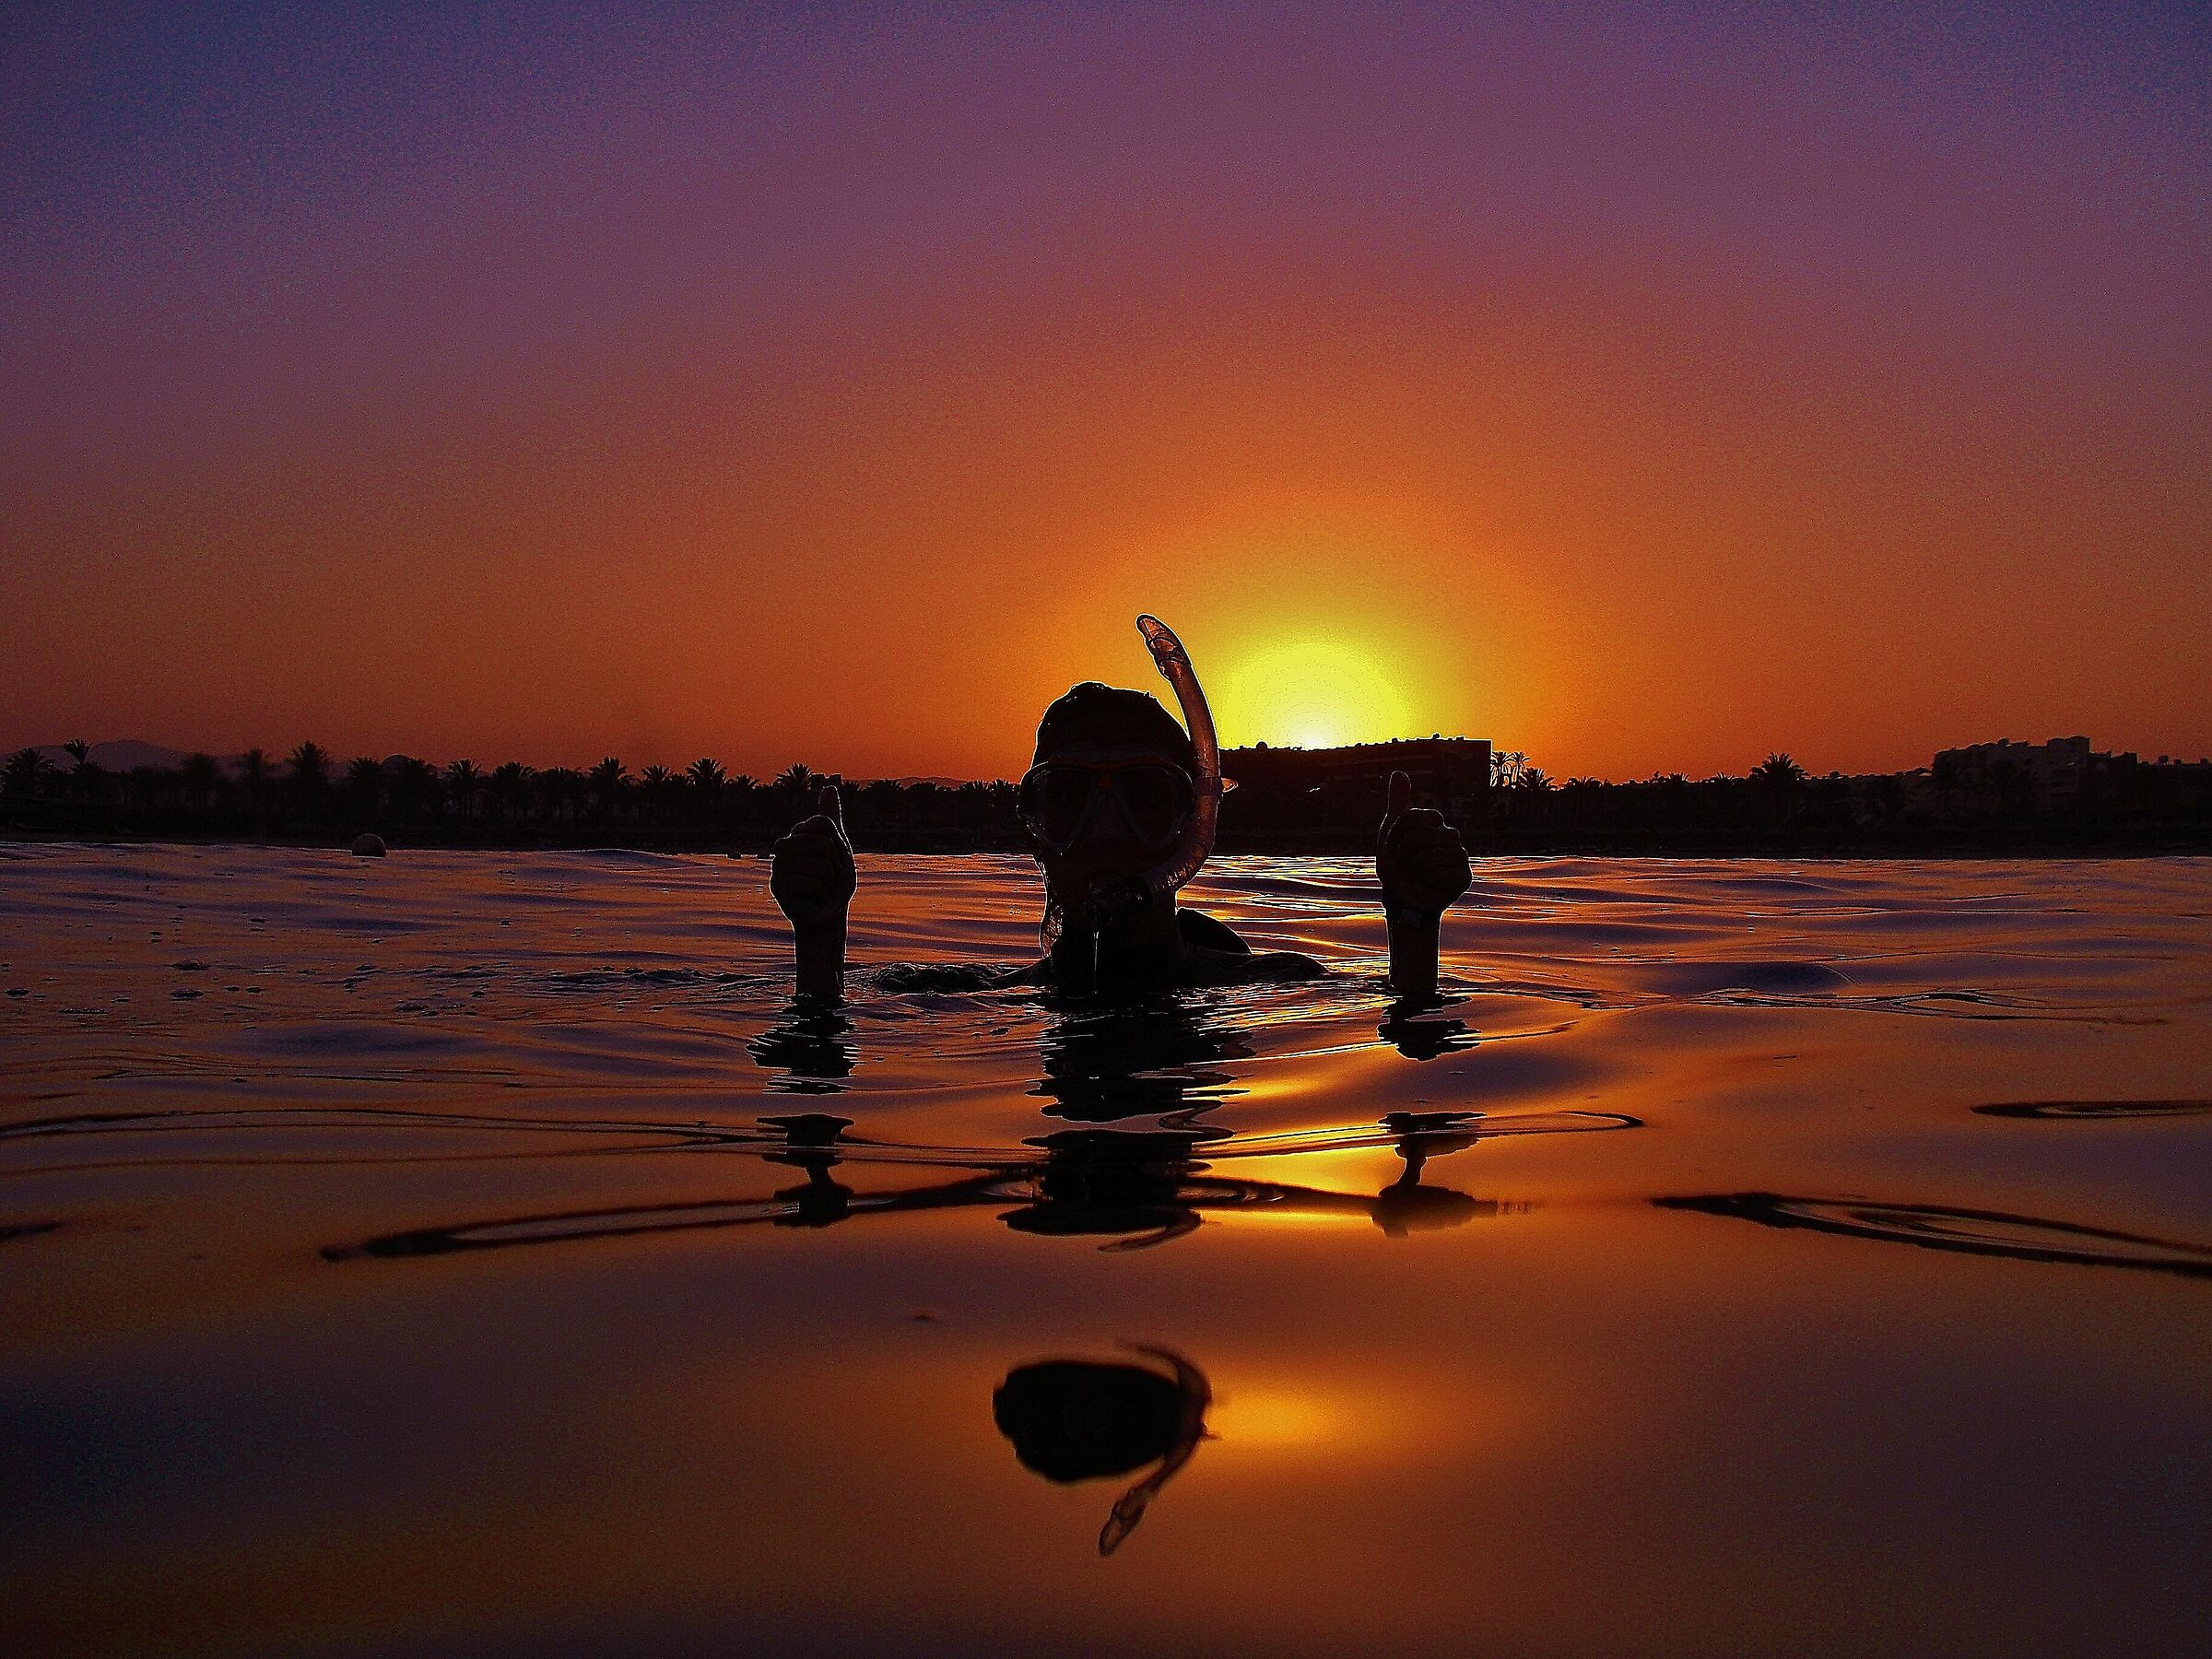 Snorkeling at sunset ...